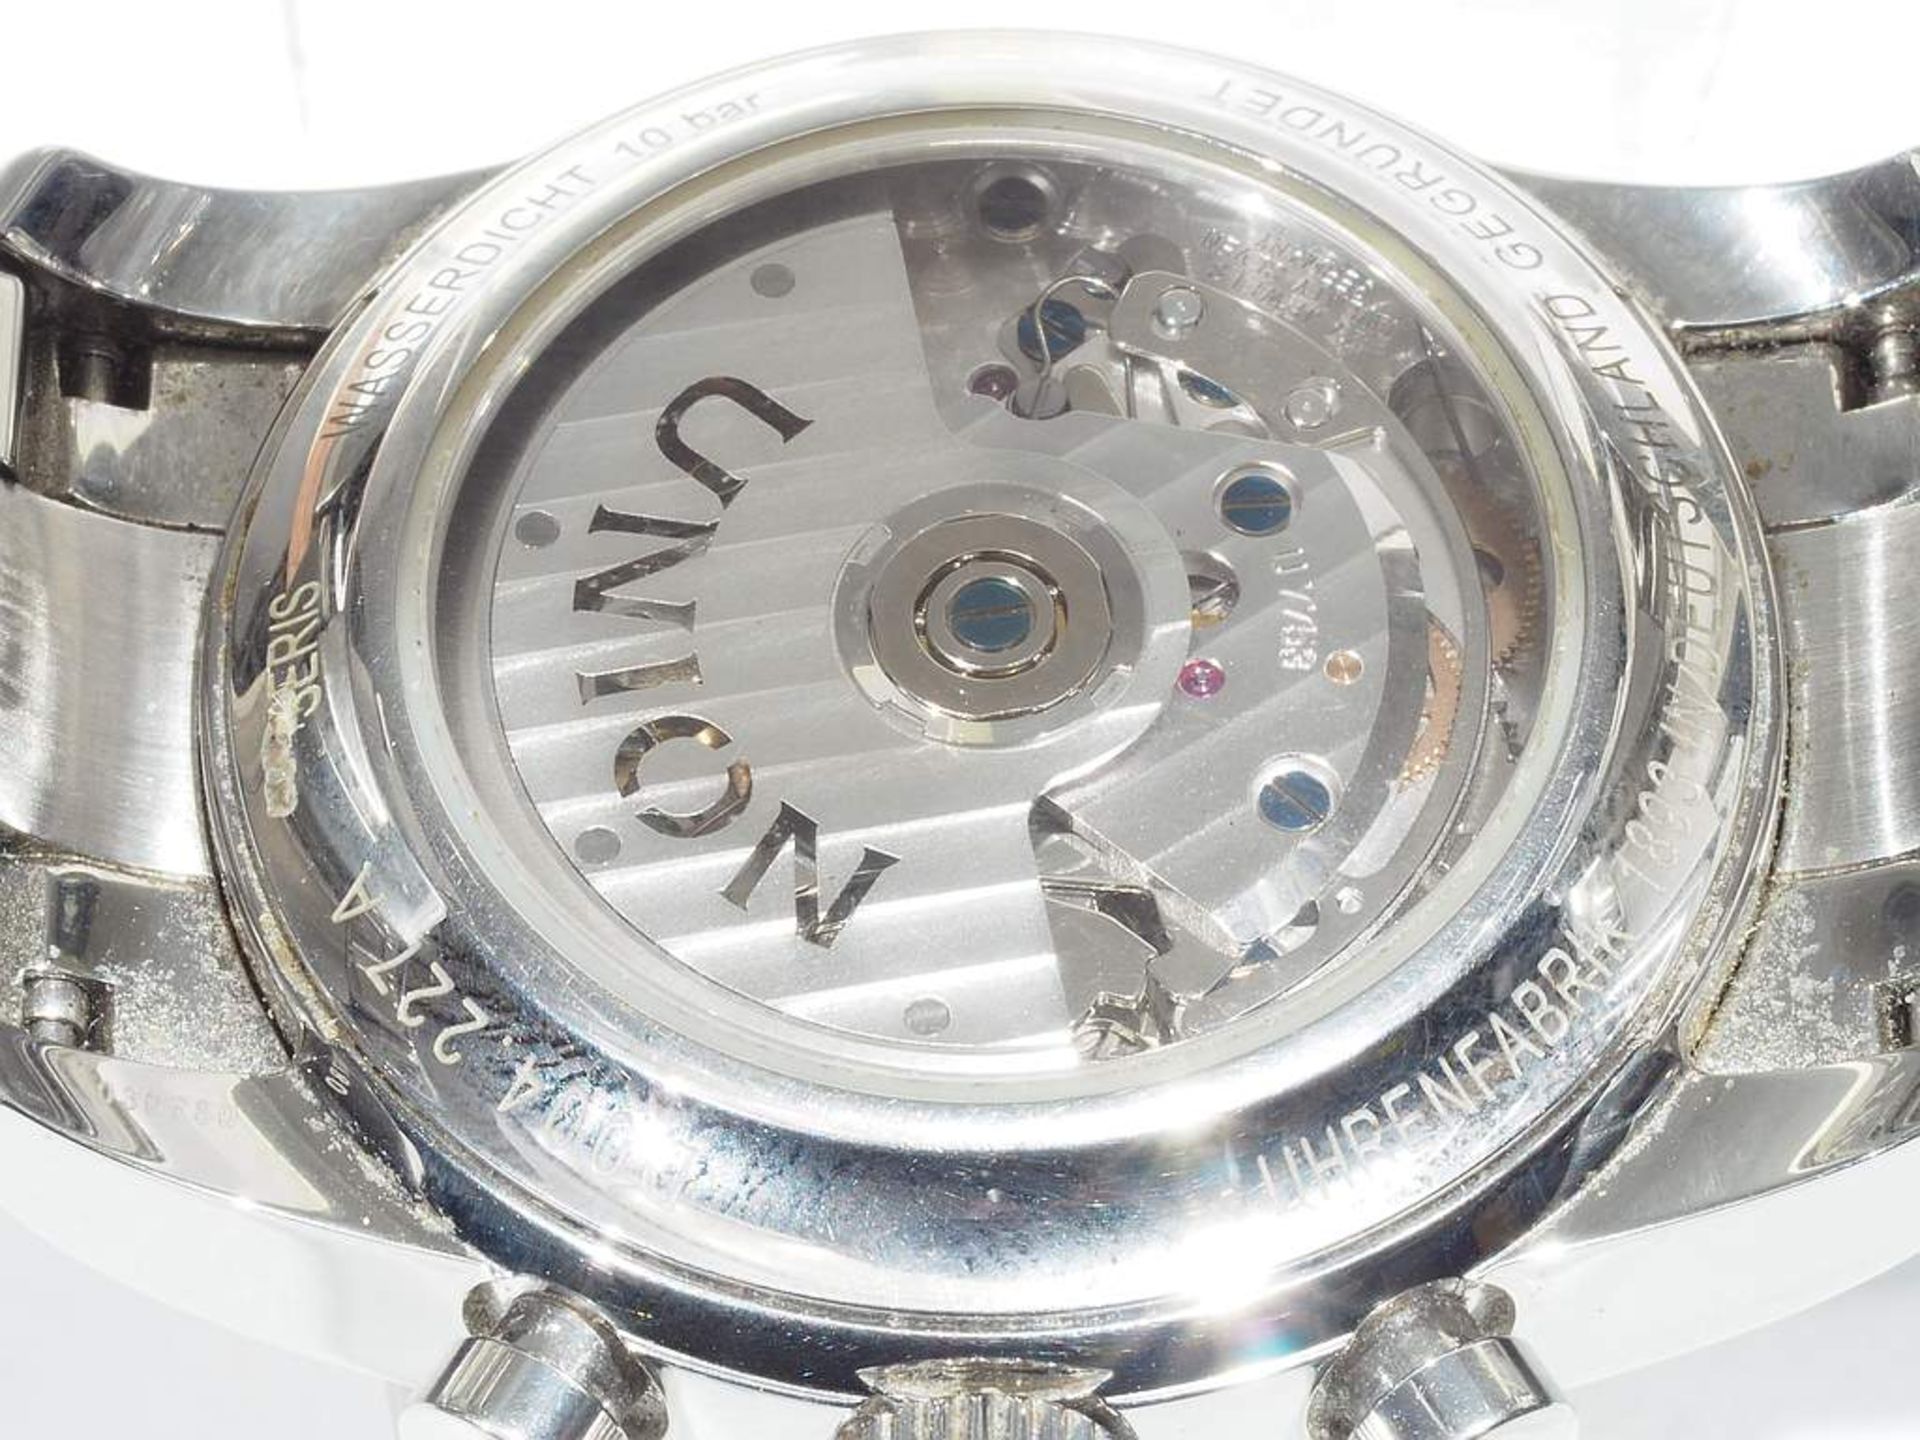 Herren-Armbanduhr Chronograph UNION GLASHÜTTE aus der Kollektion Seris. Gehäuse Nummer D004.227 - Bild 6 aus 8